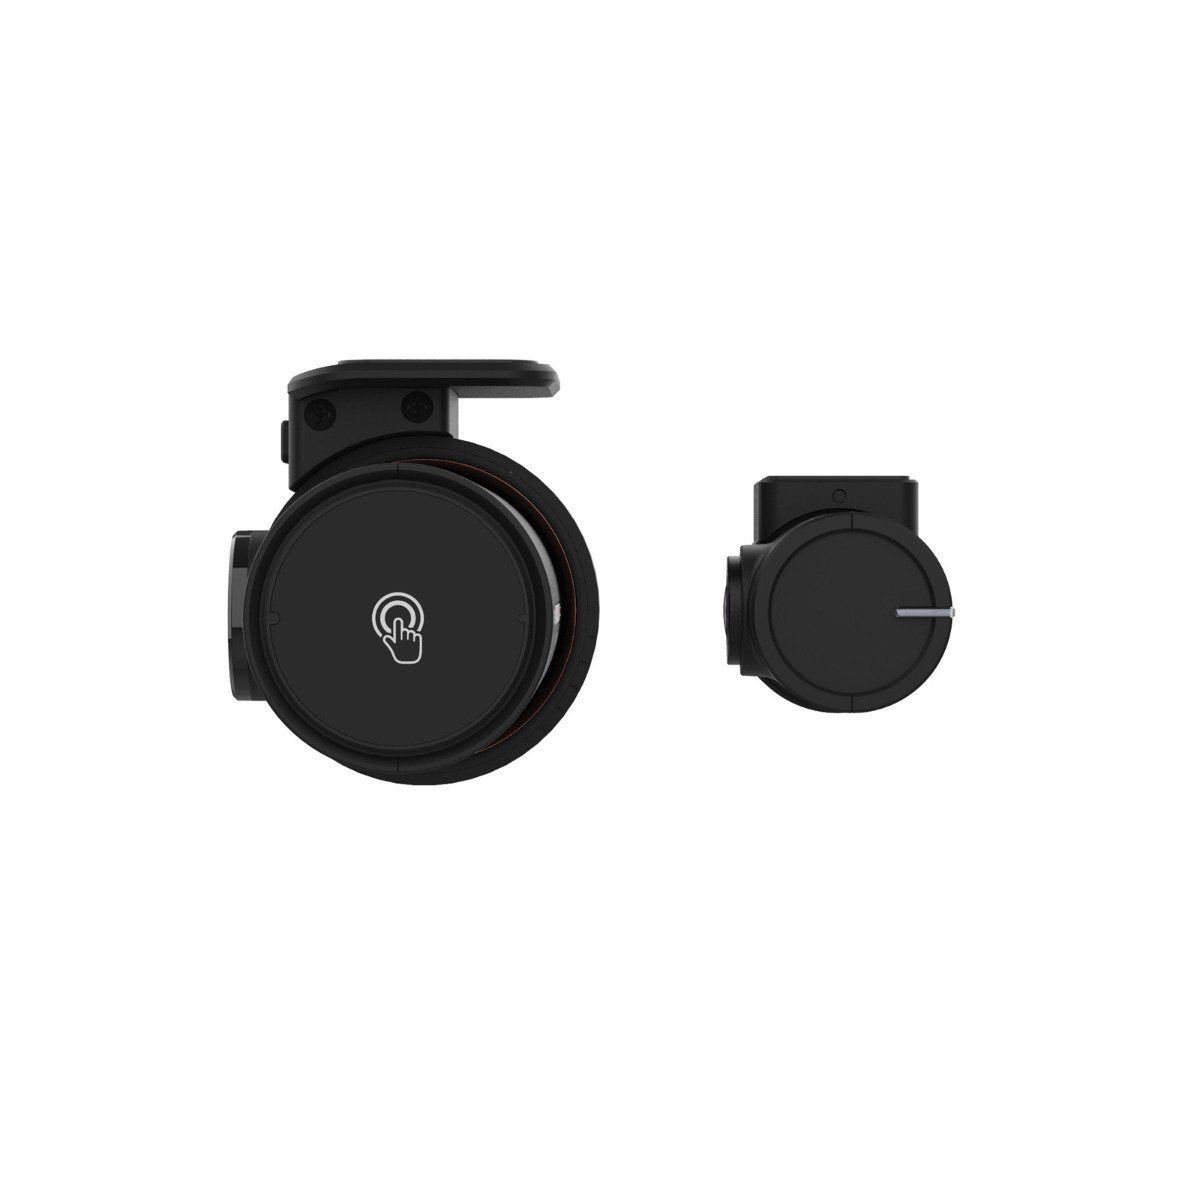 64GB BlackVue Ful Dashcam Heckkamera, DR770X-2CH Dashcam BlackVue +